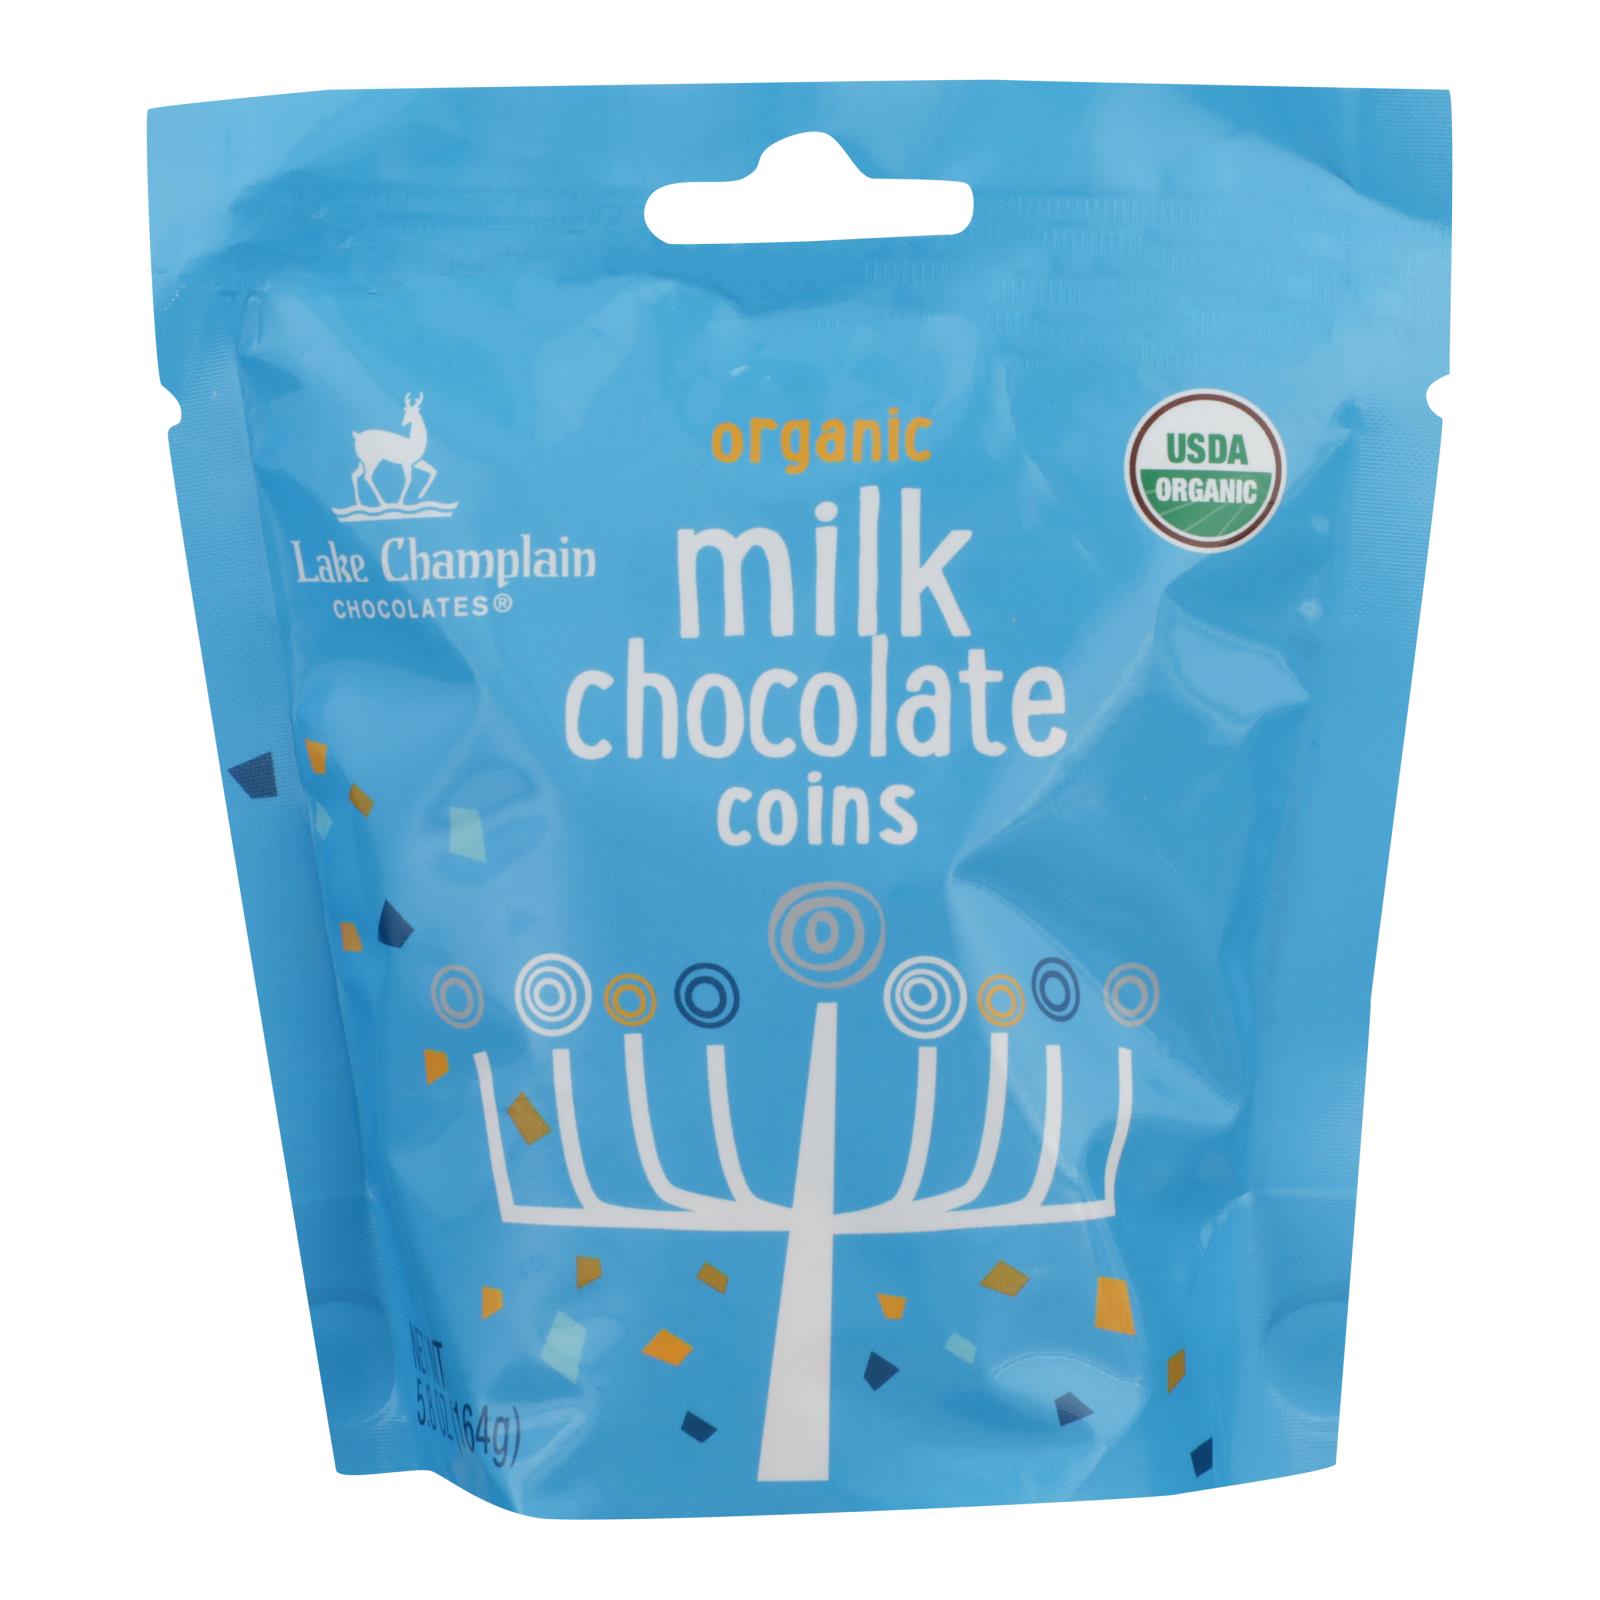 Lake Champlain Chocolates - Milk Chocolate Coin Hanukka - 12개 묶음상품 - 5.8 OZ